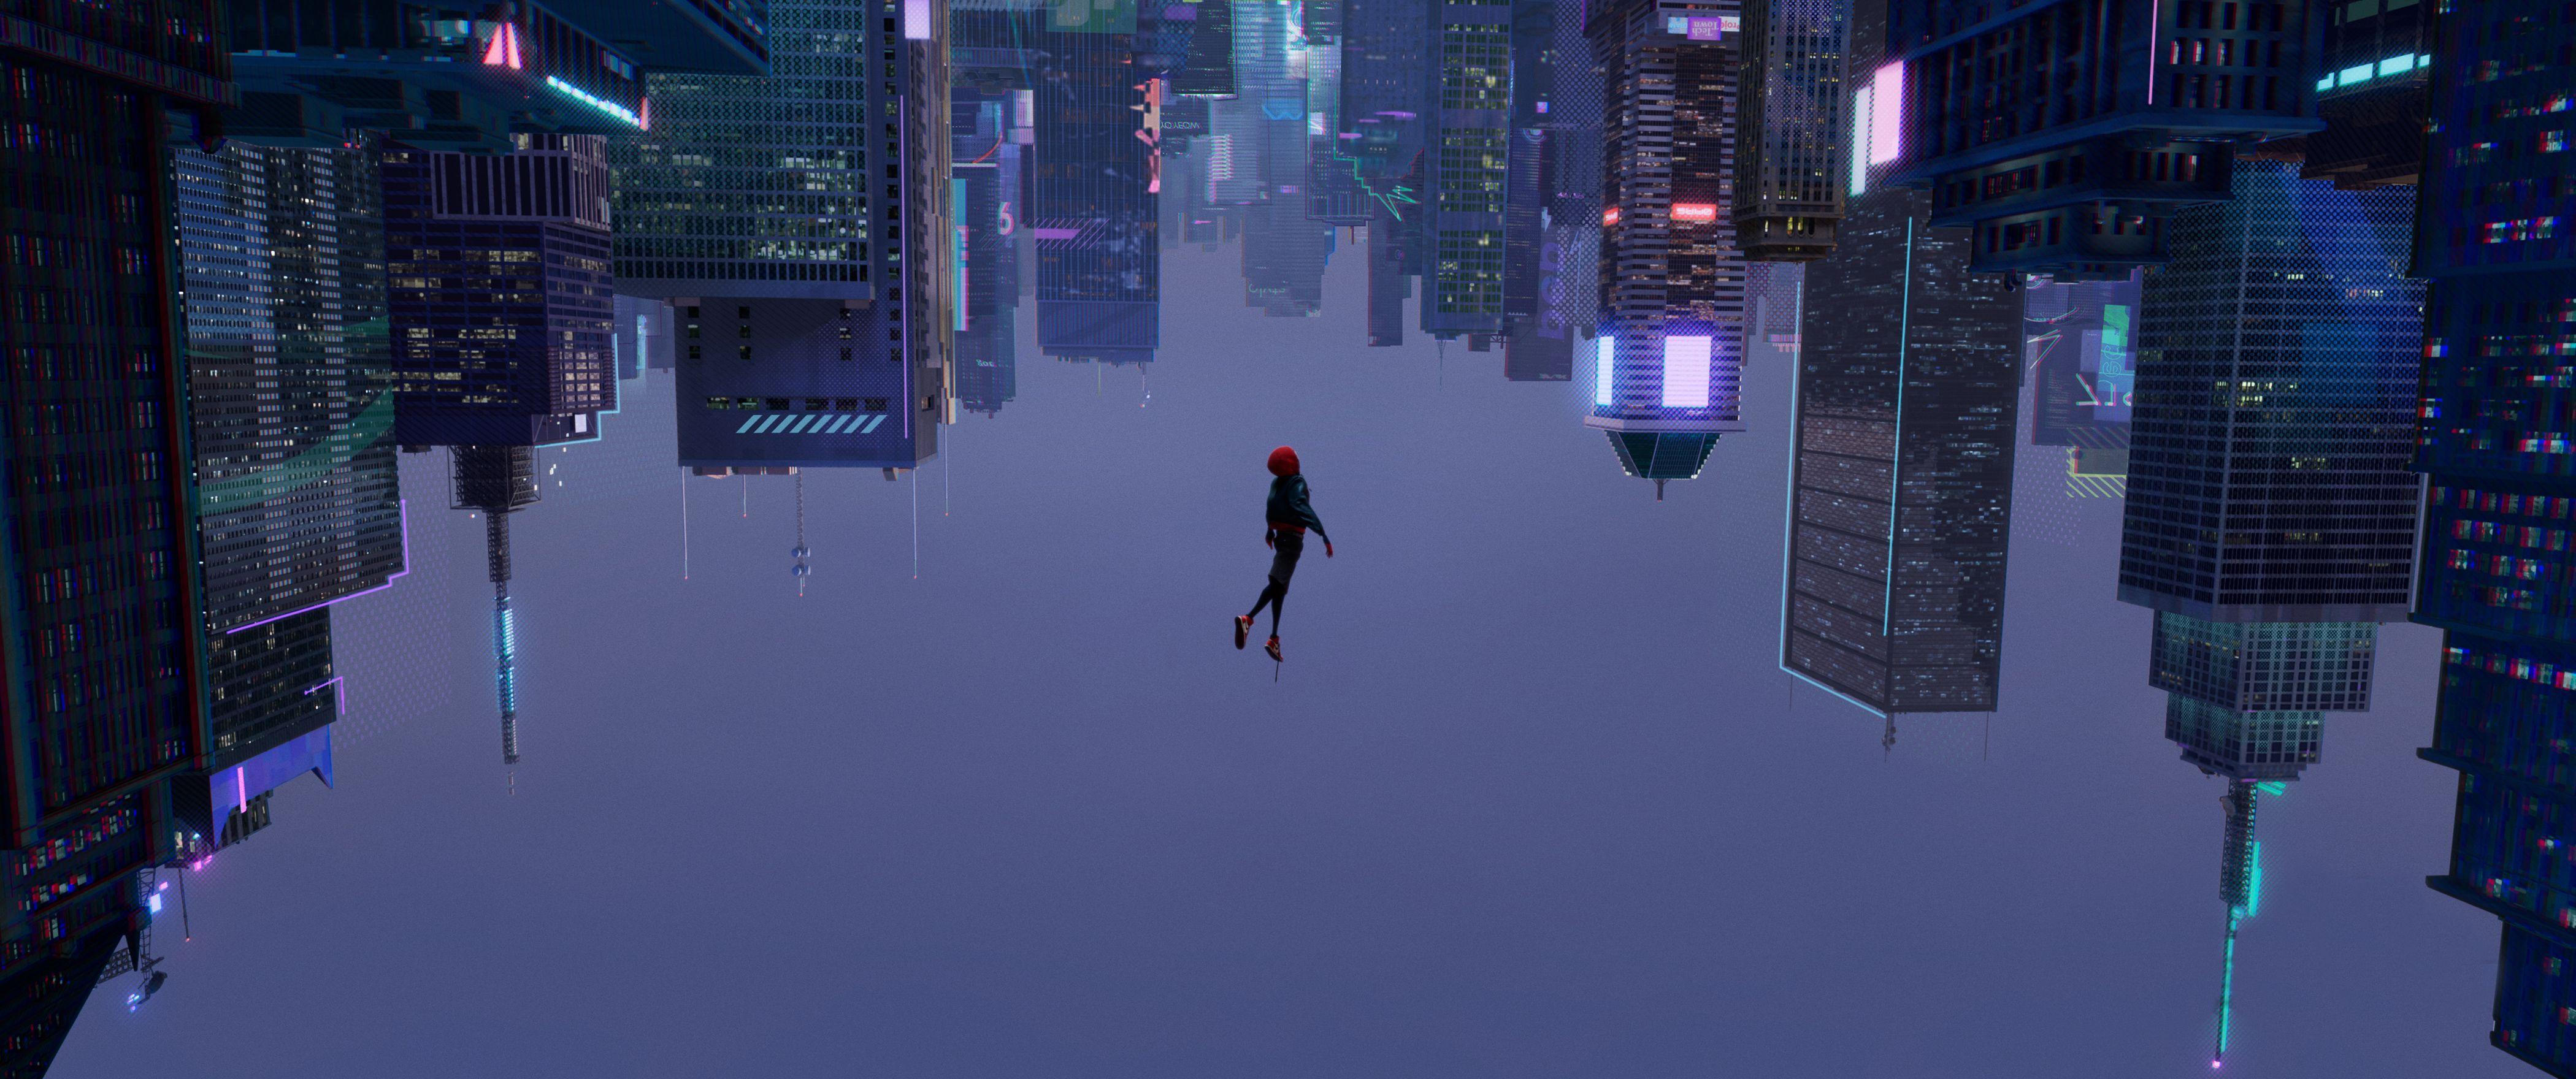 Hình nền 4200x1760 Spider Man Into The Spider Verse